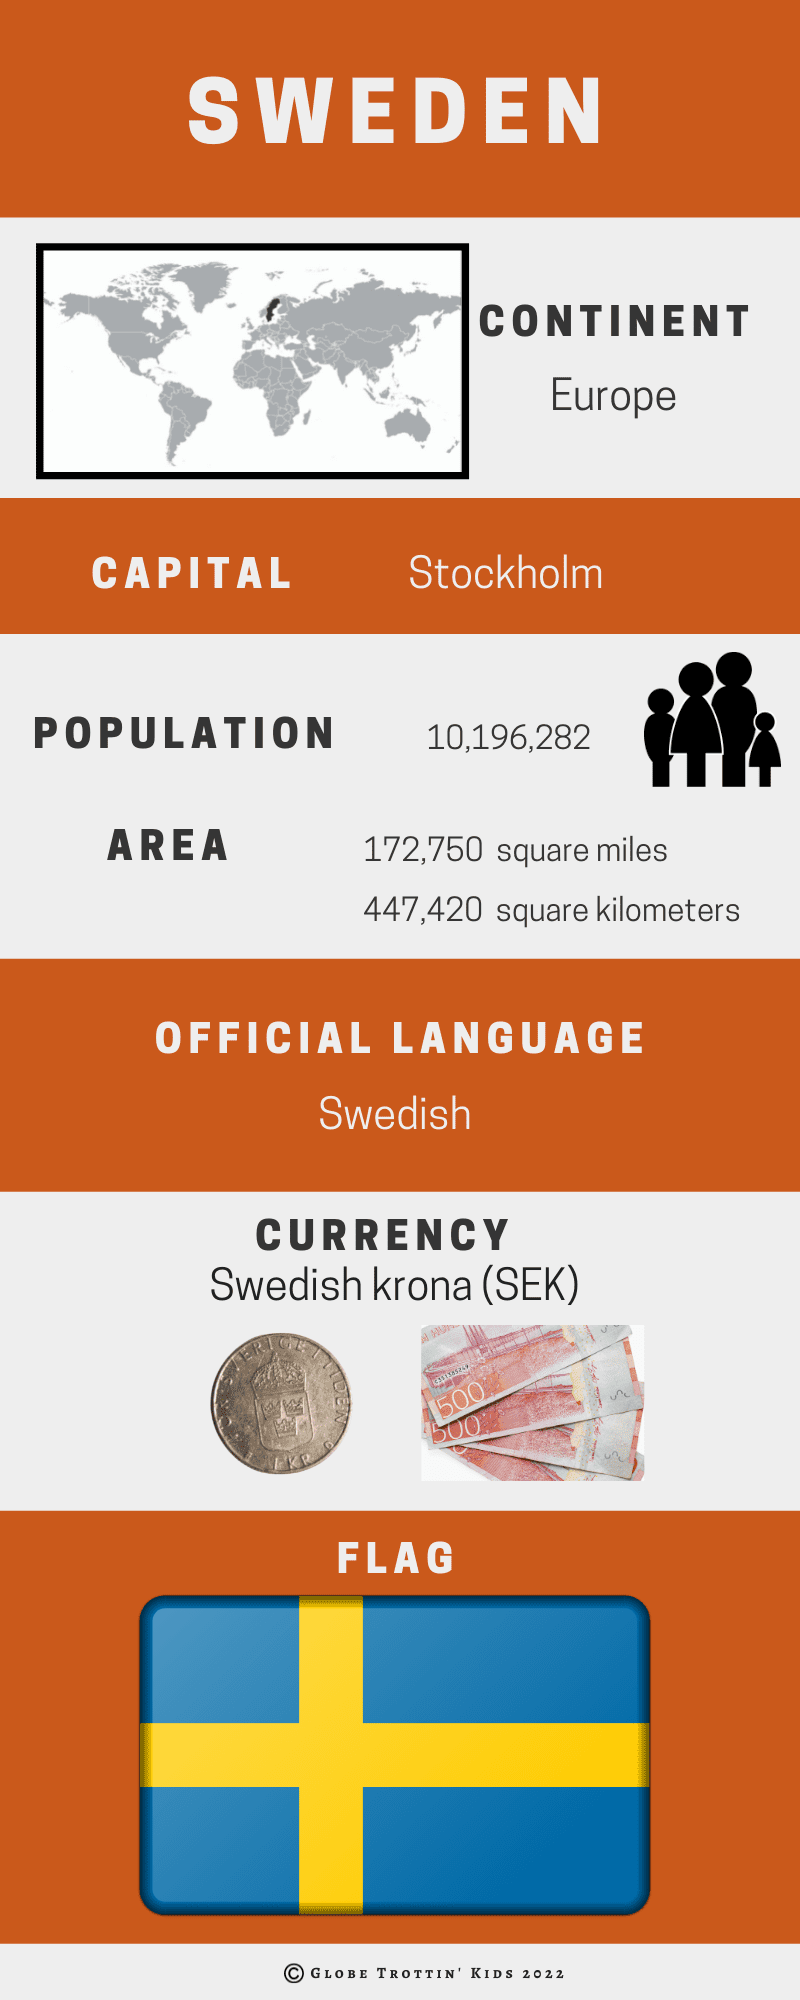 information about Sweden